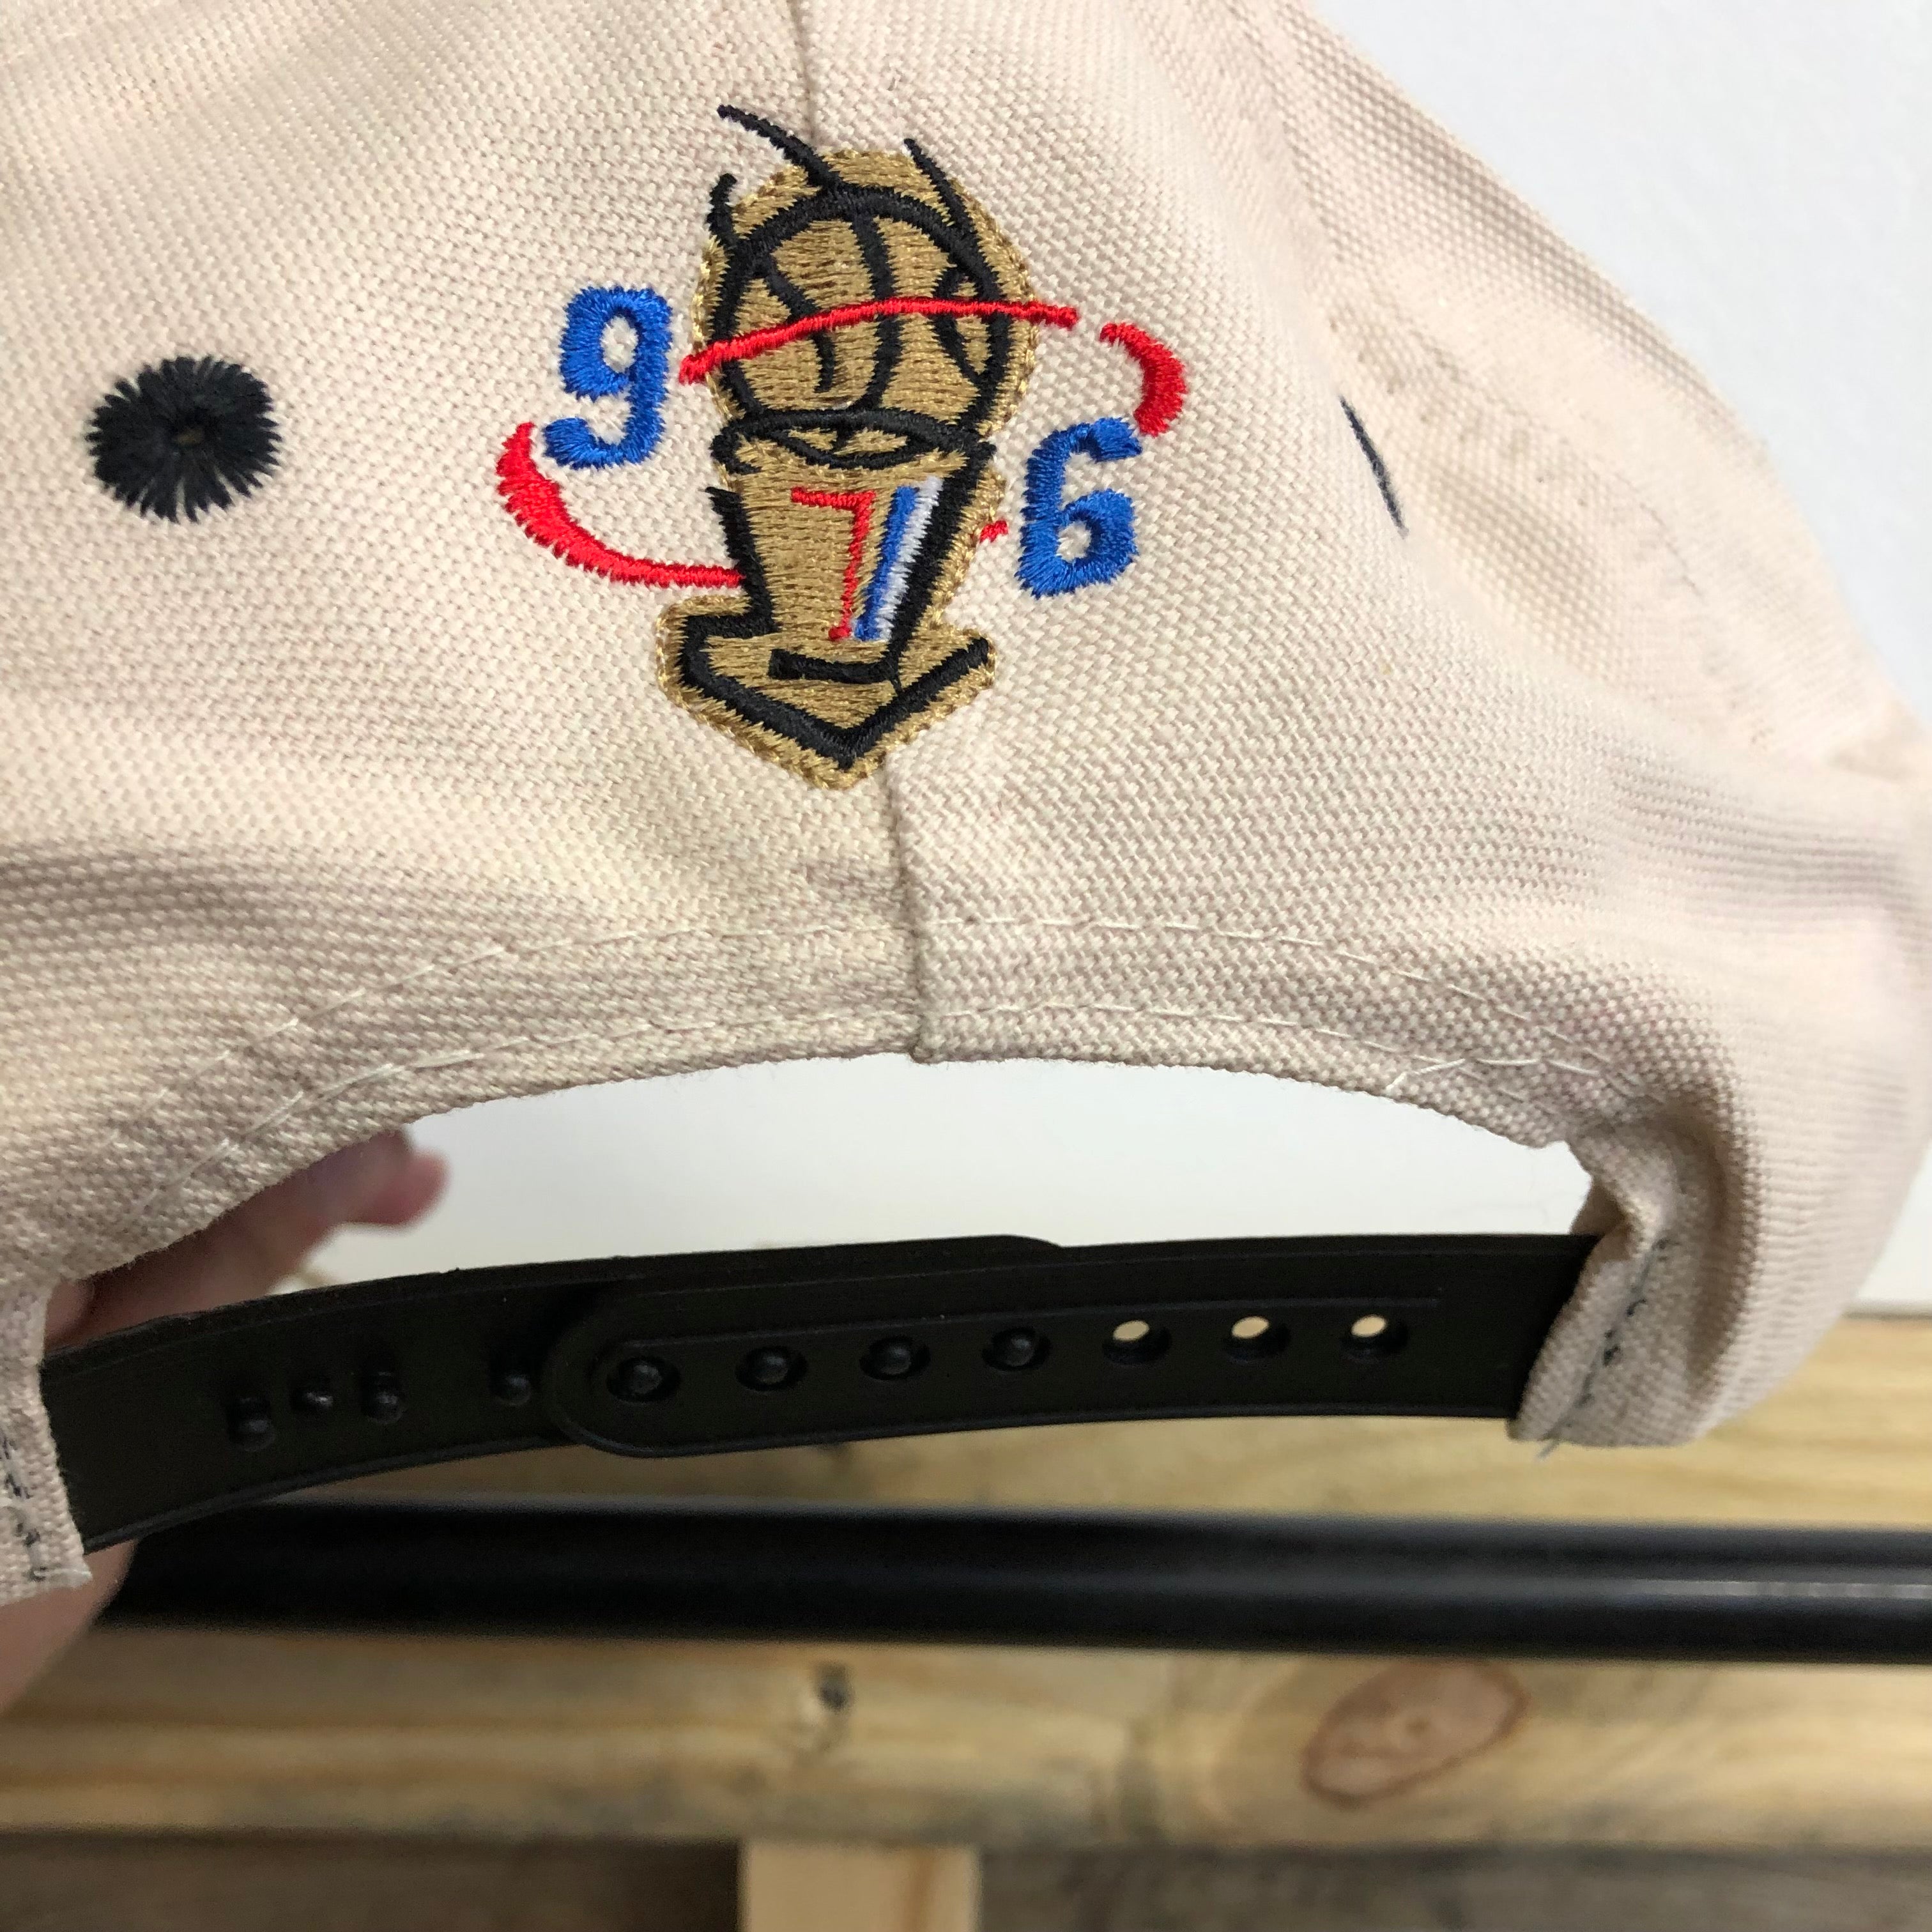 Vintage 1996 Chicago Bulls NBA Champions White NBA Logo 7 Athletic Snapback  Hat